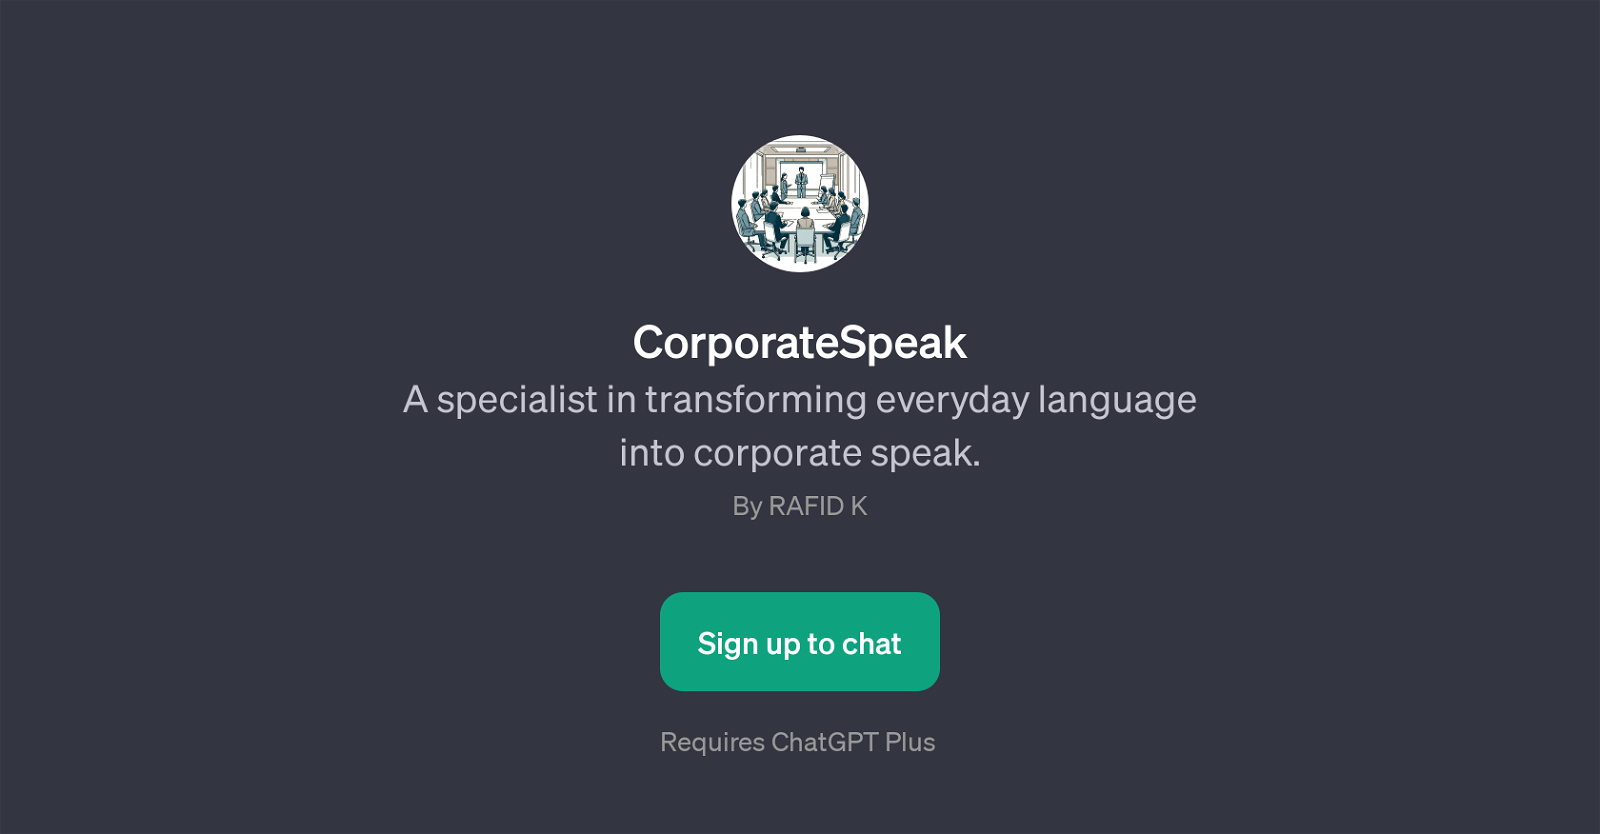 CorporateSpeak website